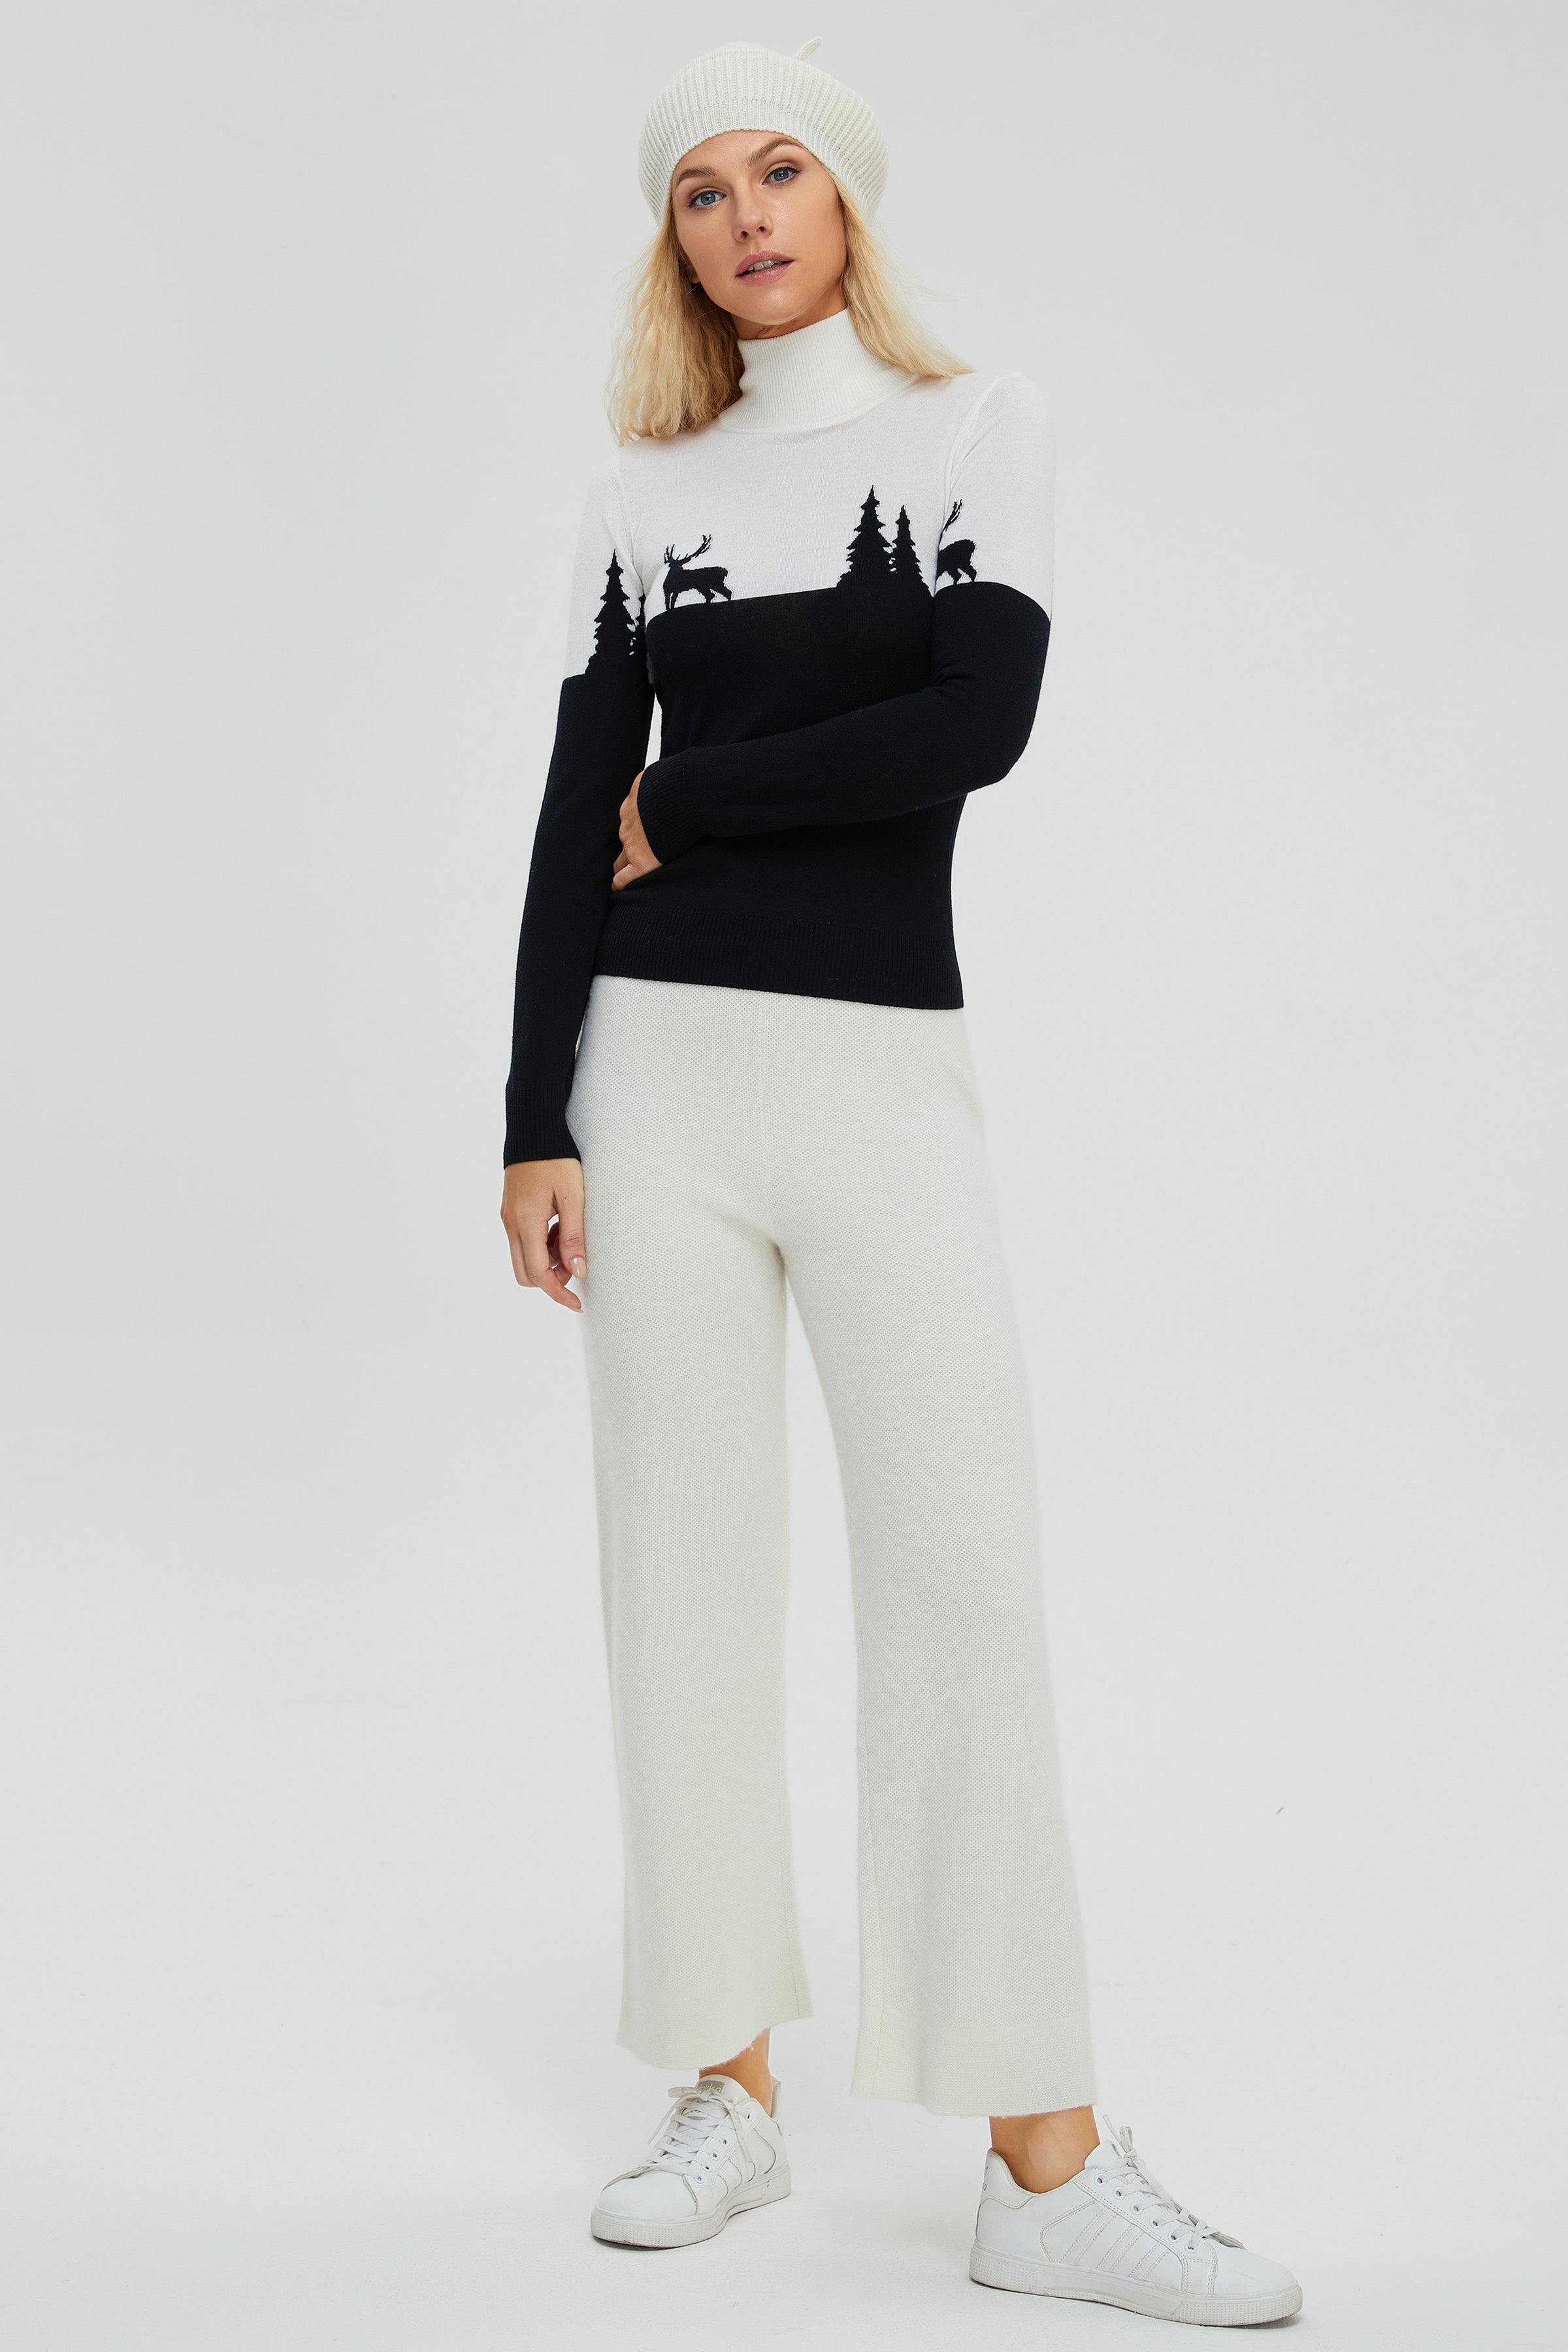 Women's Sweater, Merino Wool, Turtleneck